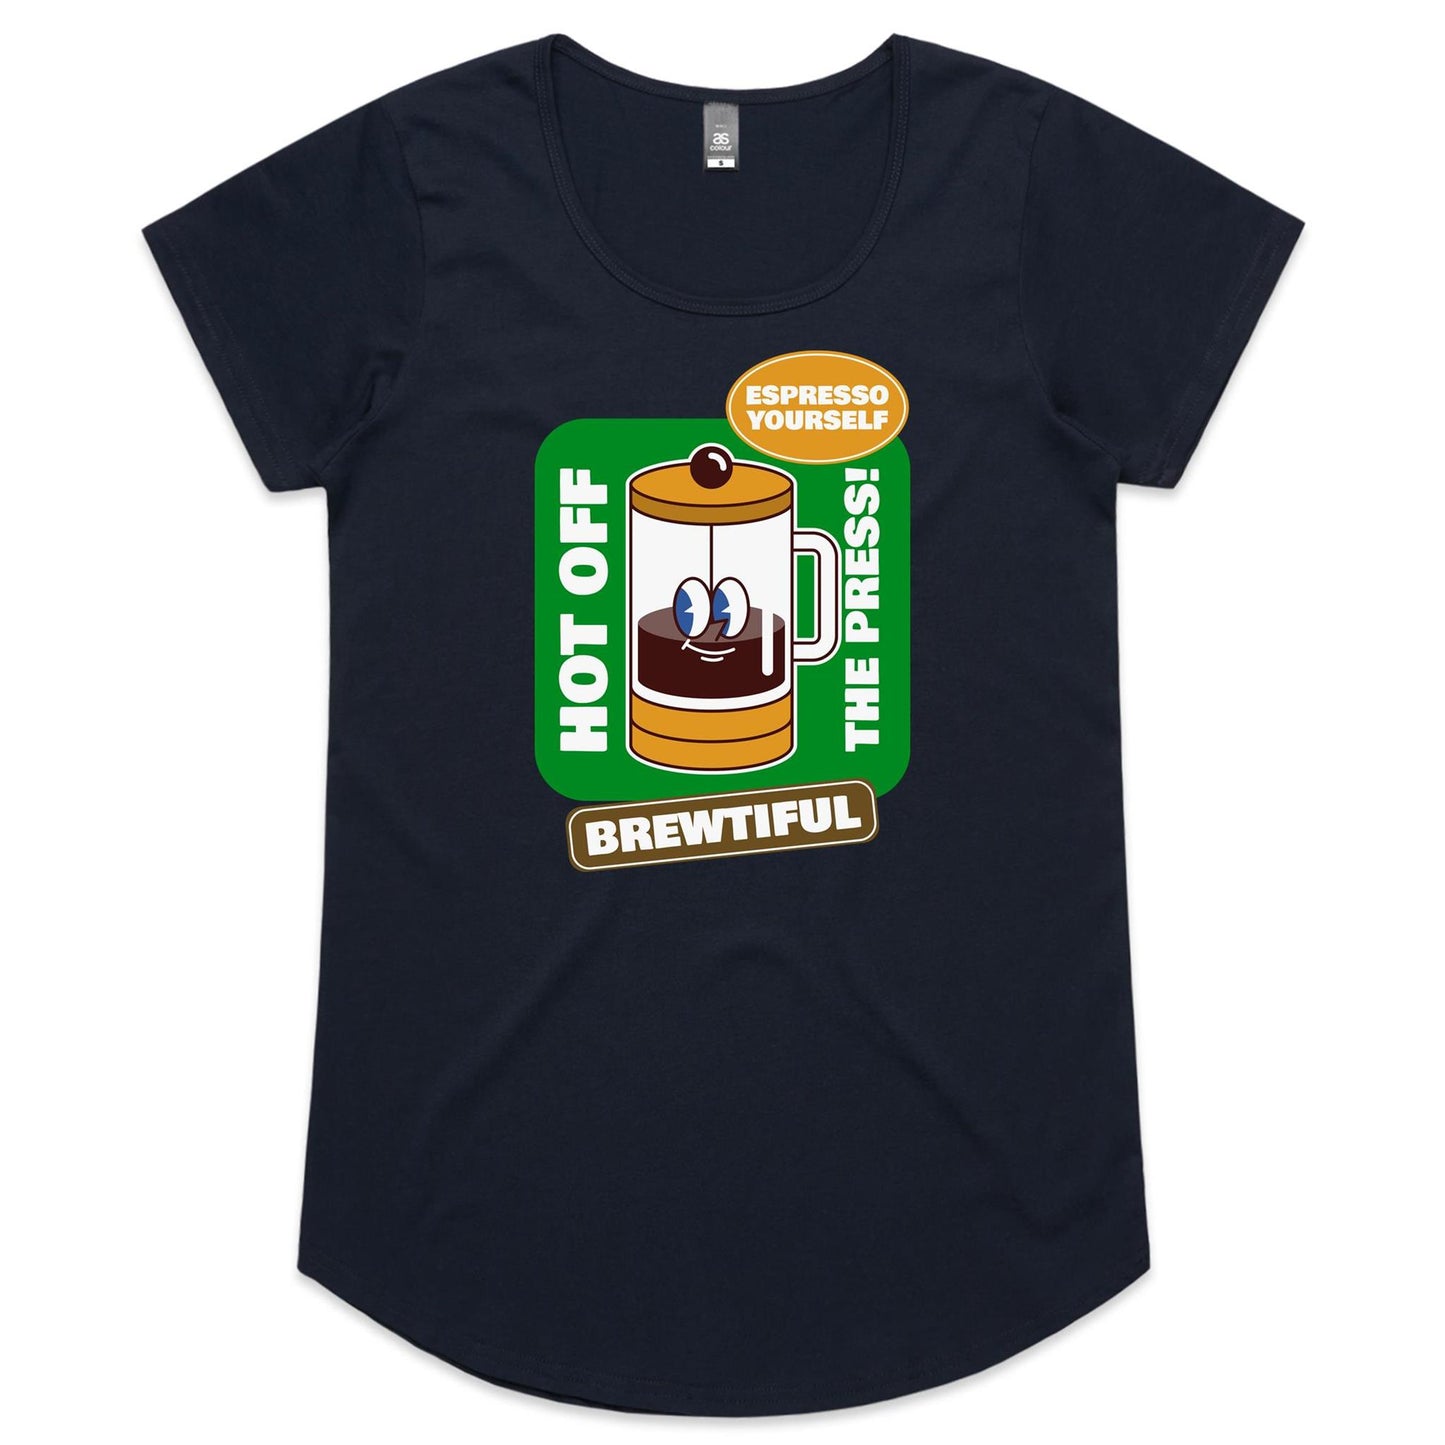 Brewtiful, Espresso Yourself - Womens Scoop Neck T-Shirt Navy Womens Scoop Neck T-shirt Coffee